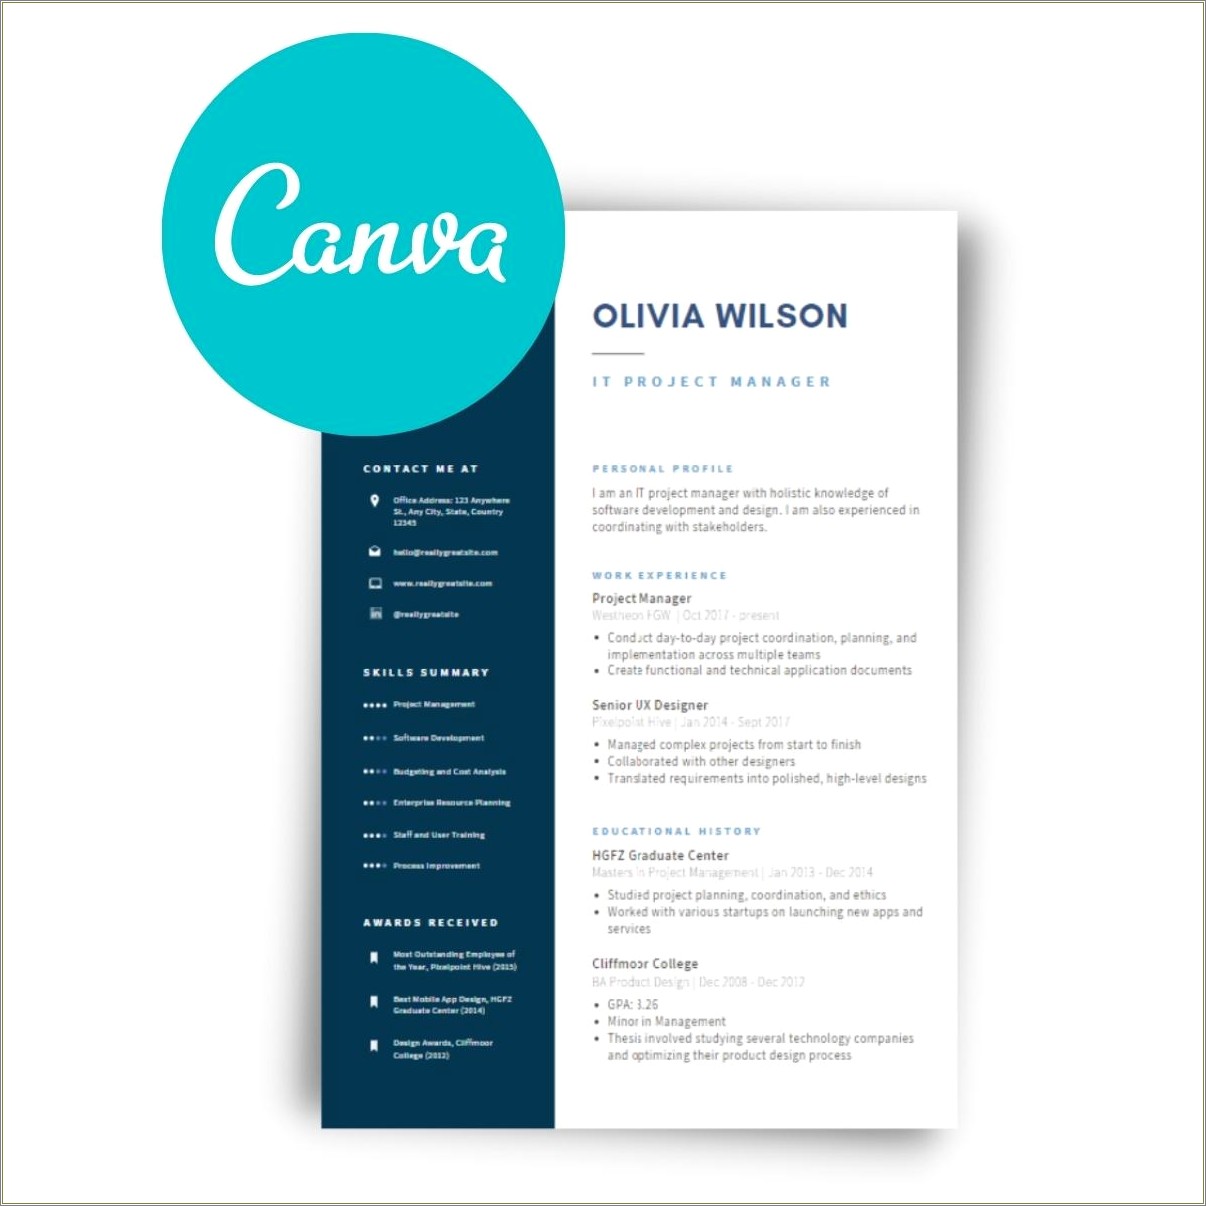 Canva Free Online Resume Maker